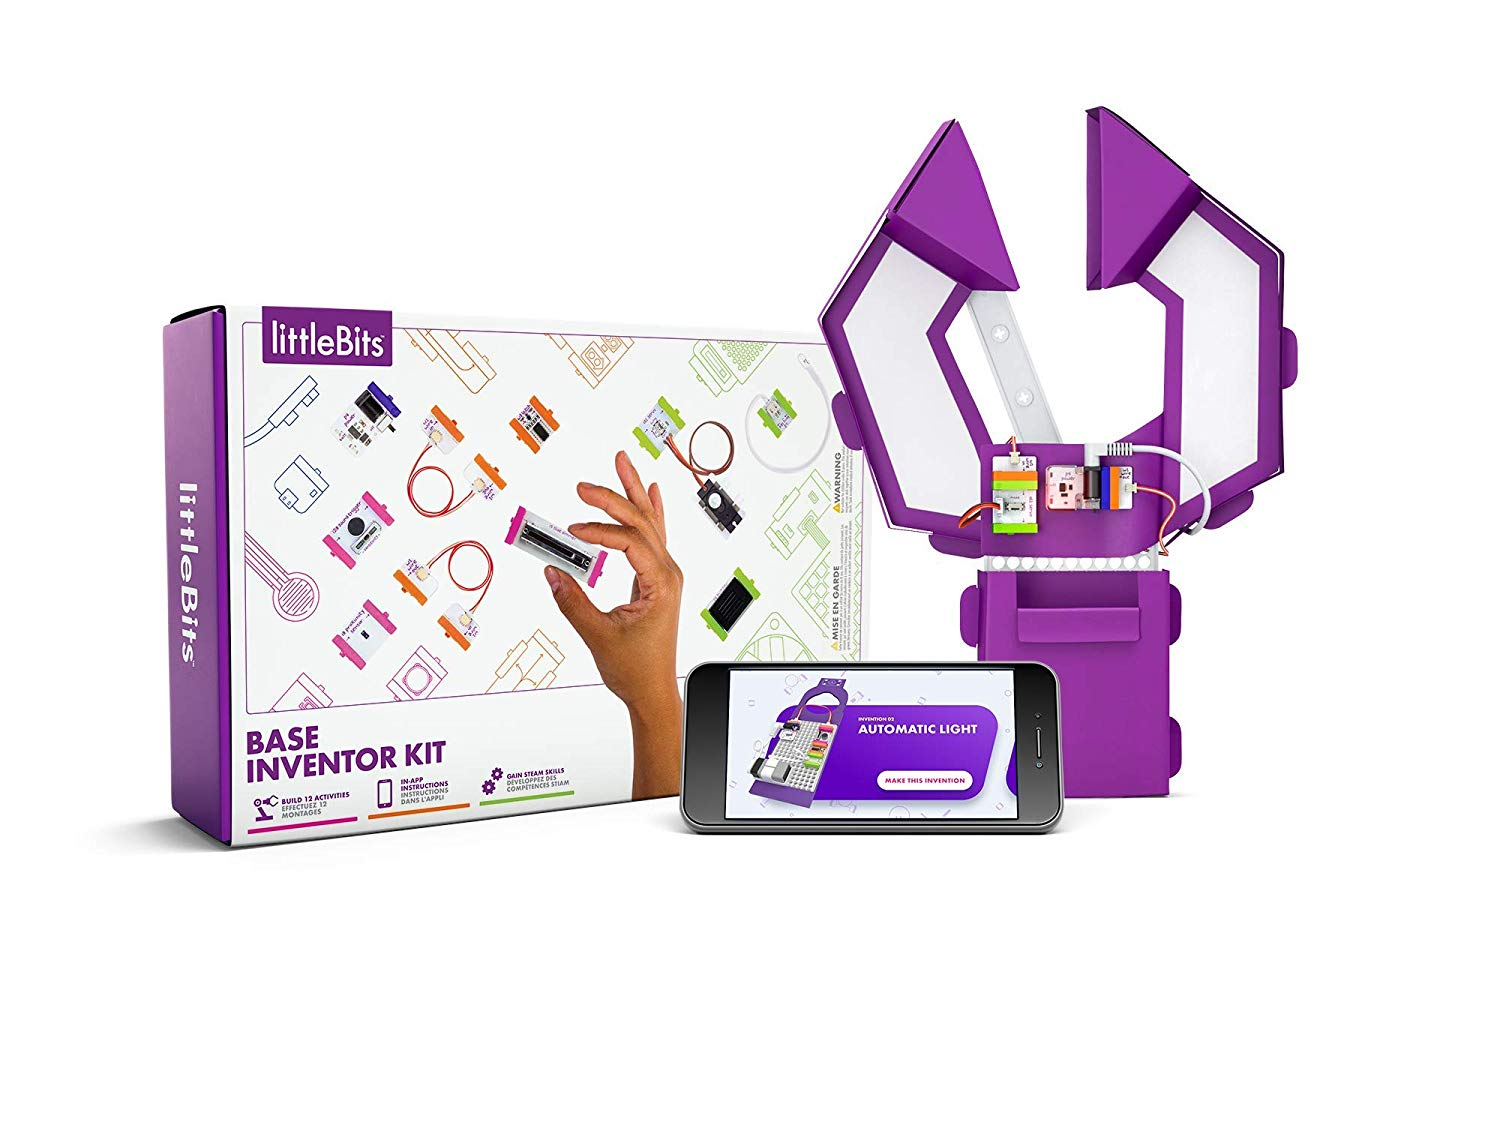 littleBits Base inventor kit